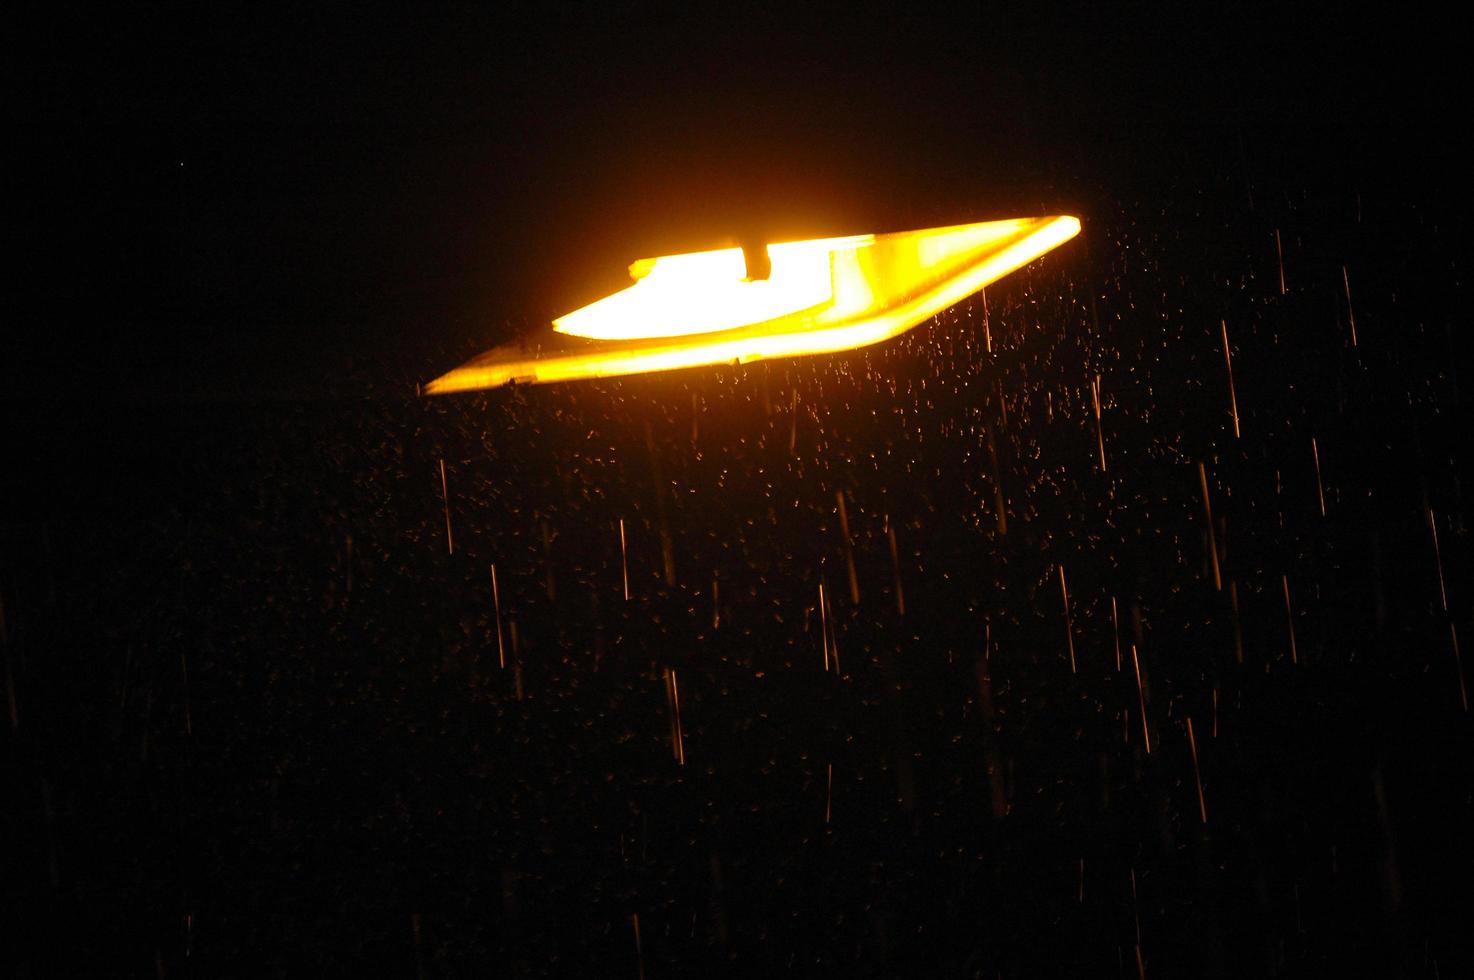 farola en una noche lluviosa foto